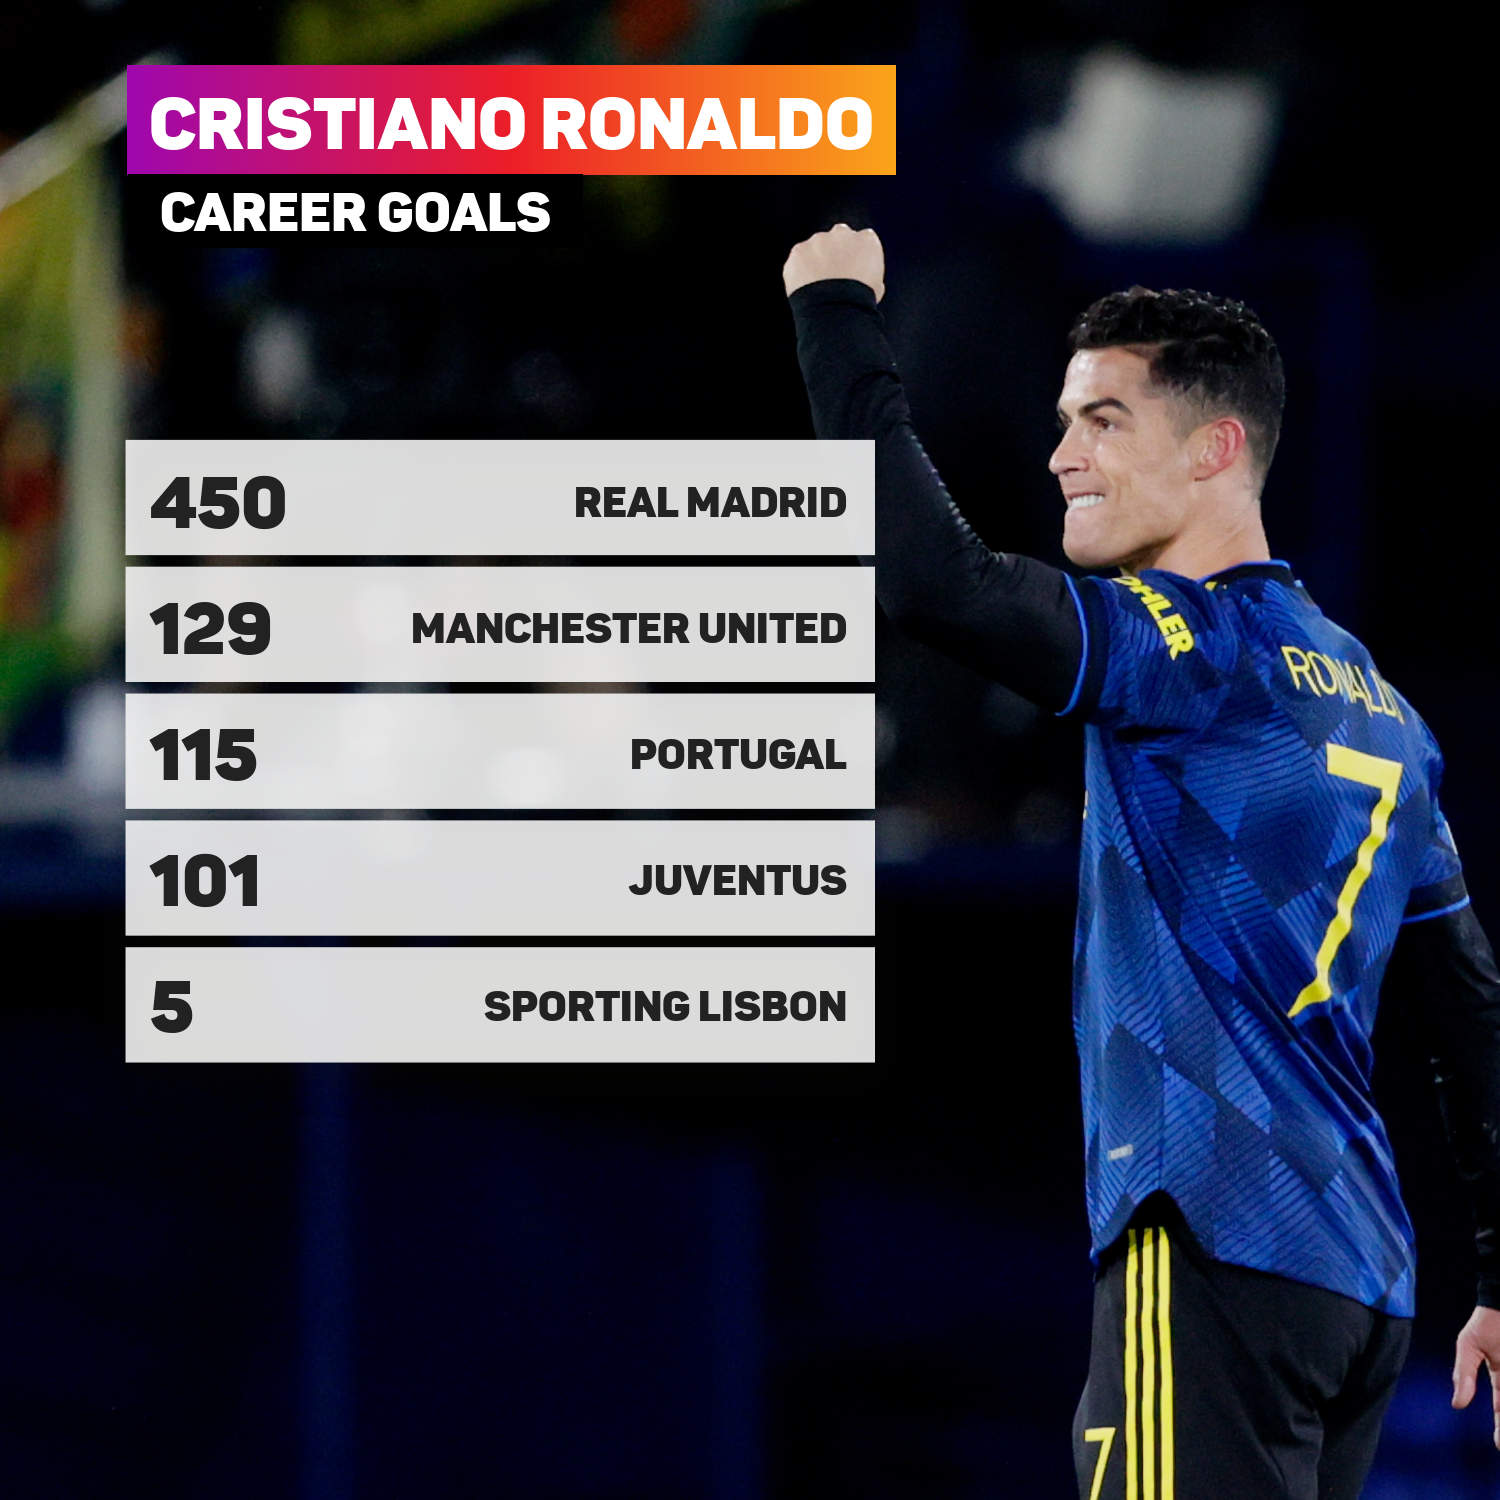 CORRECTED - Ronaldo career goals